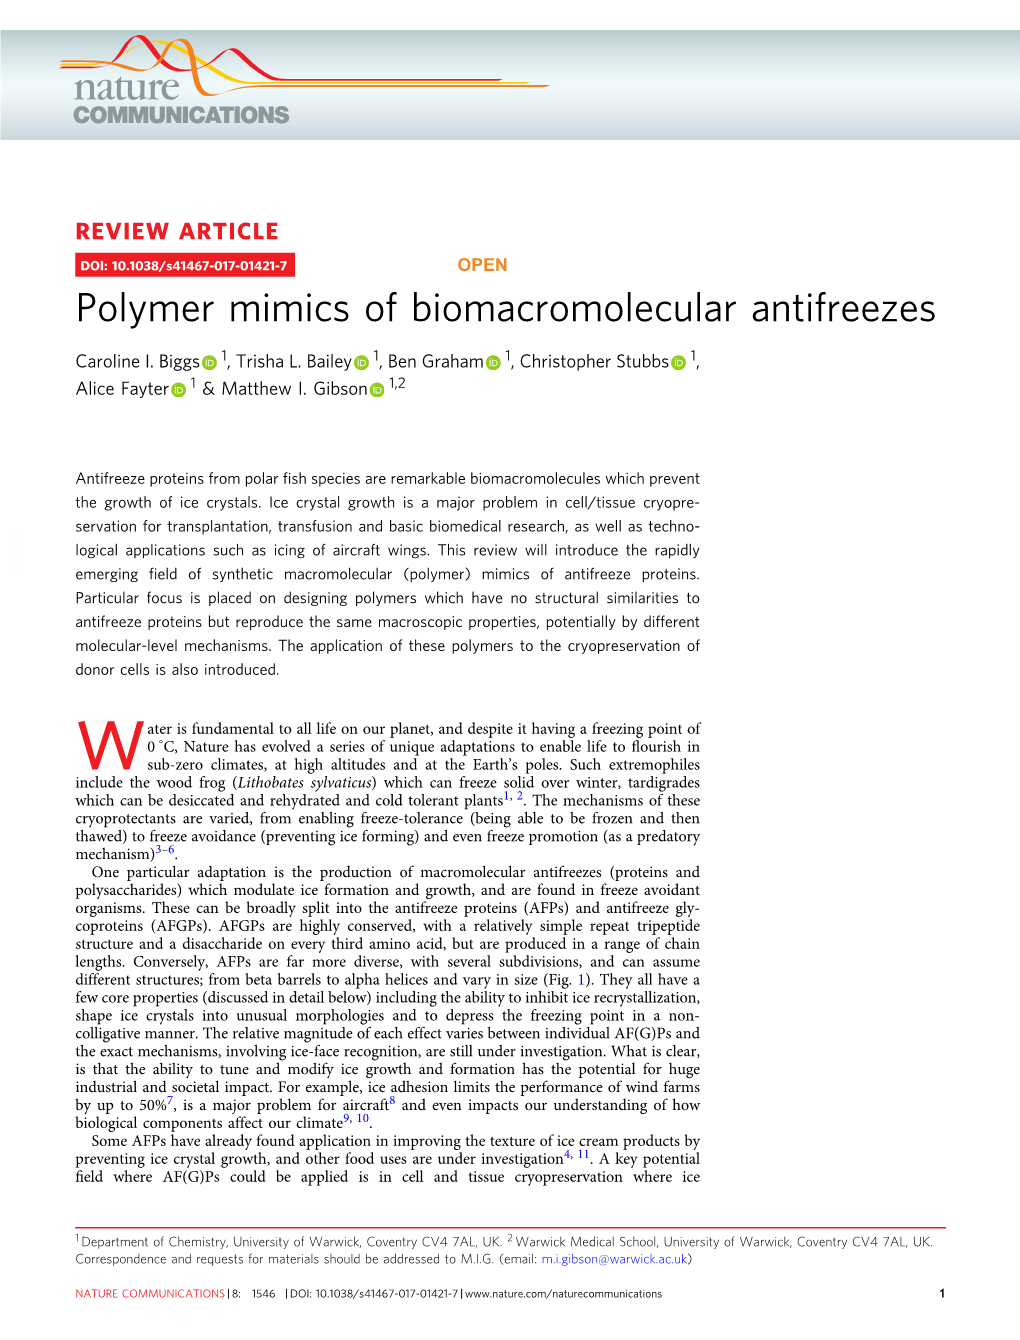 Polymer Mimics of Biomacromolecular Antifreezes